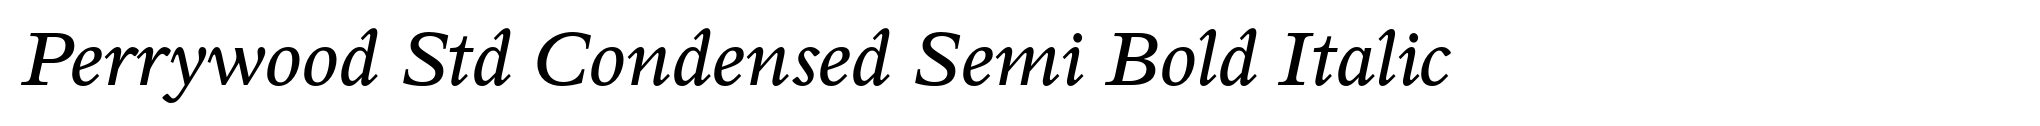 Perrywood Std Condensed Semi Bold Italic image